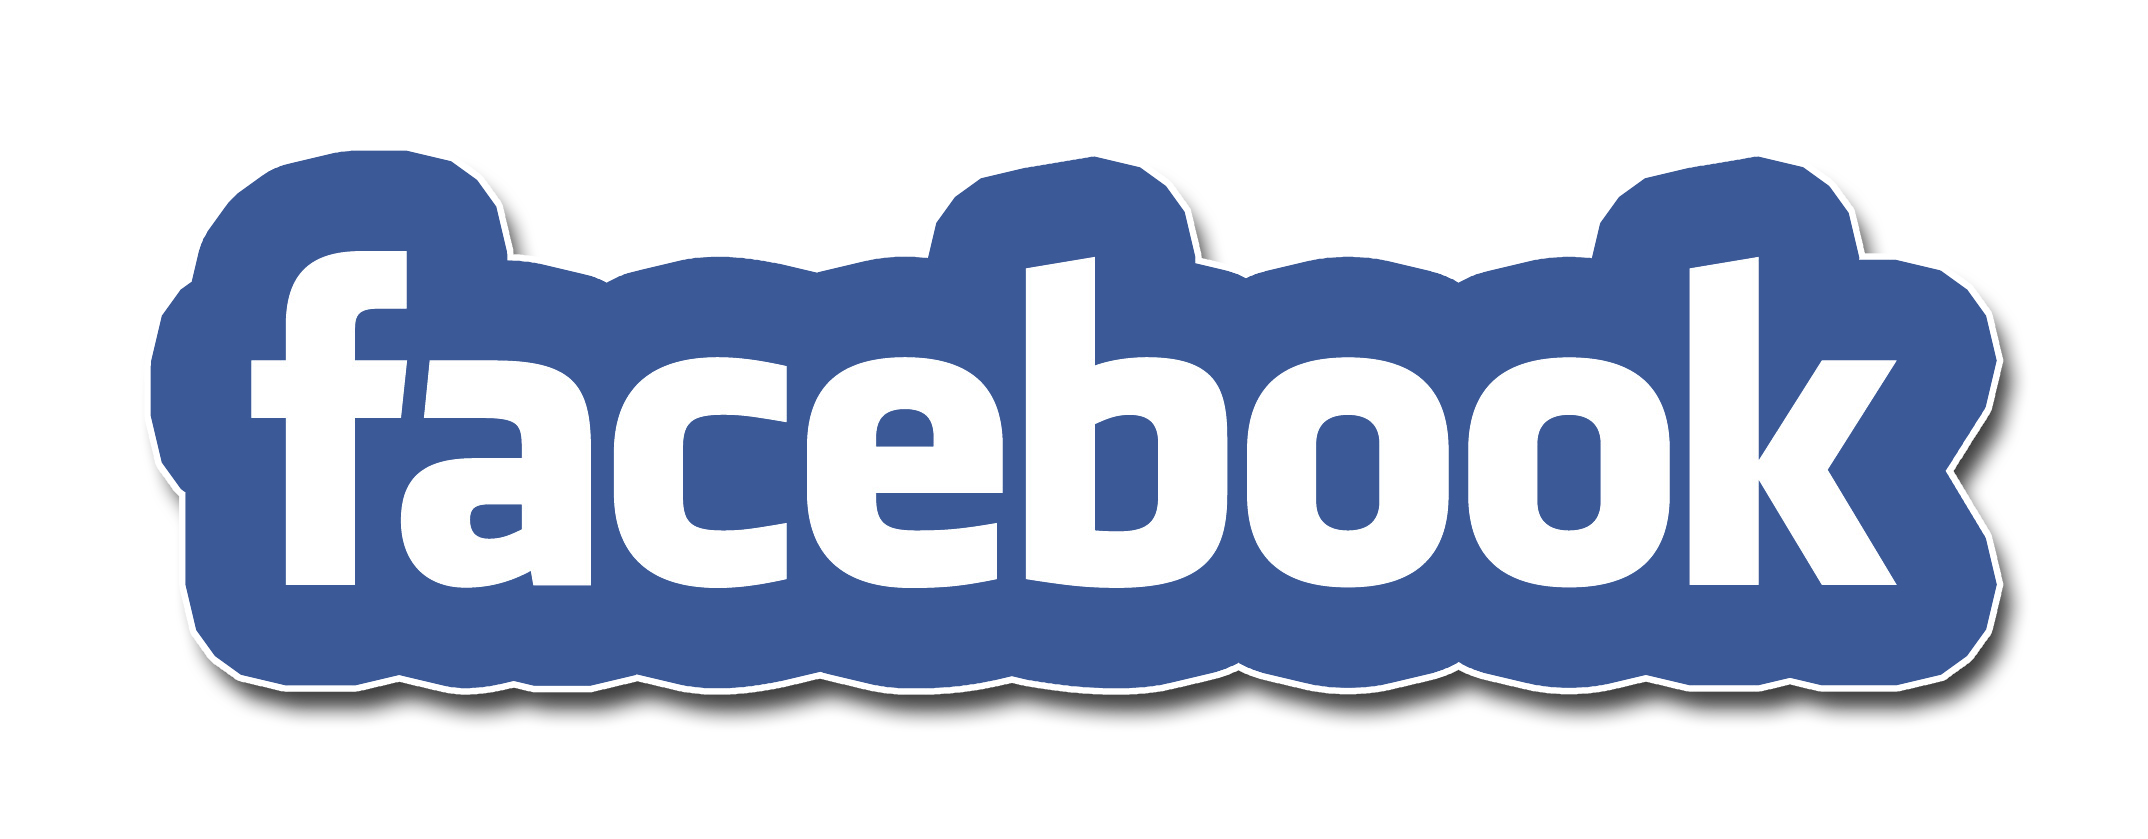 facebook-logo-png-38364.png